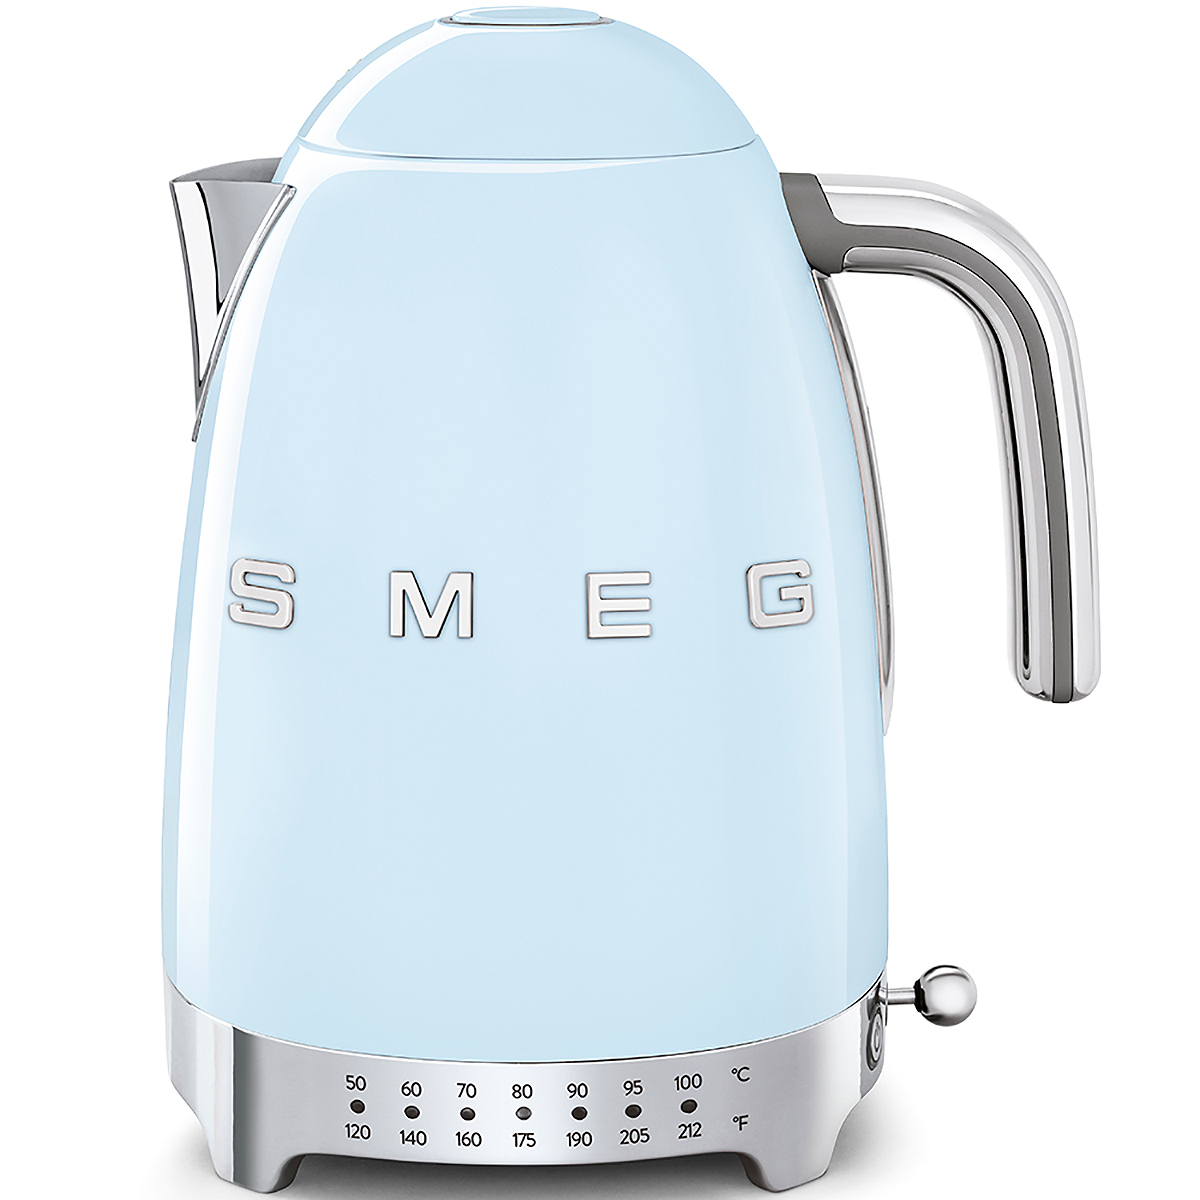 Smeg blue adjustable temperature kettle